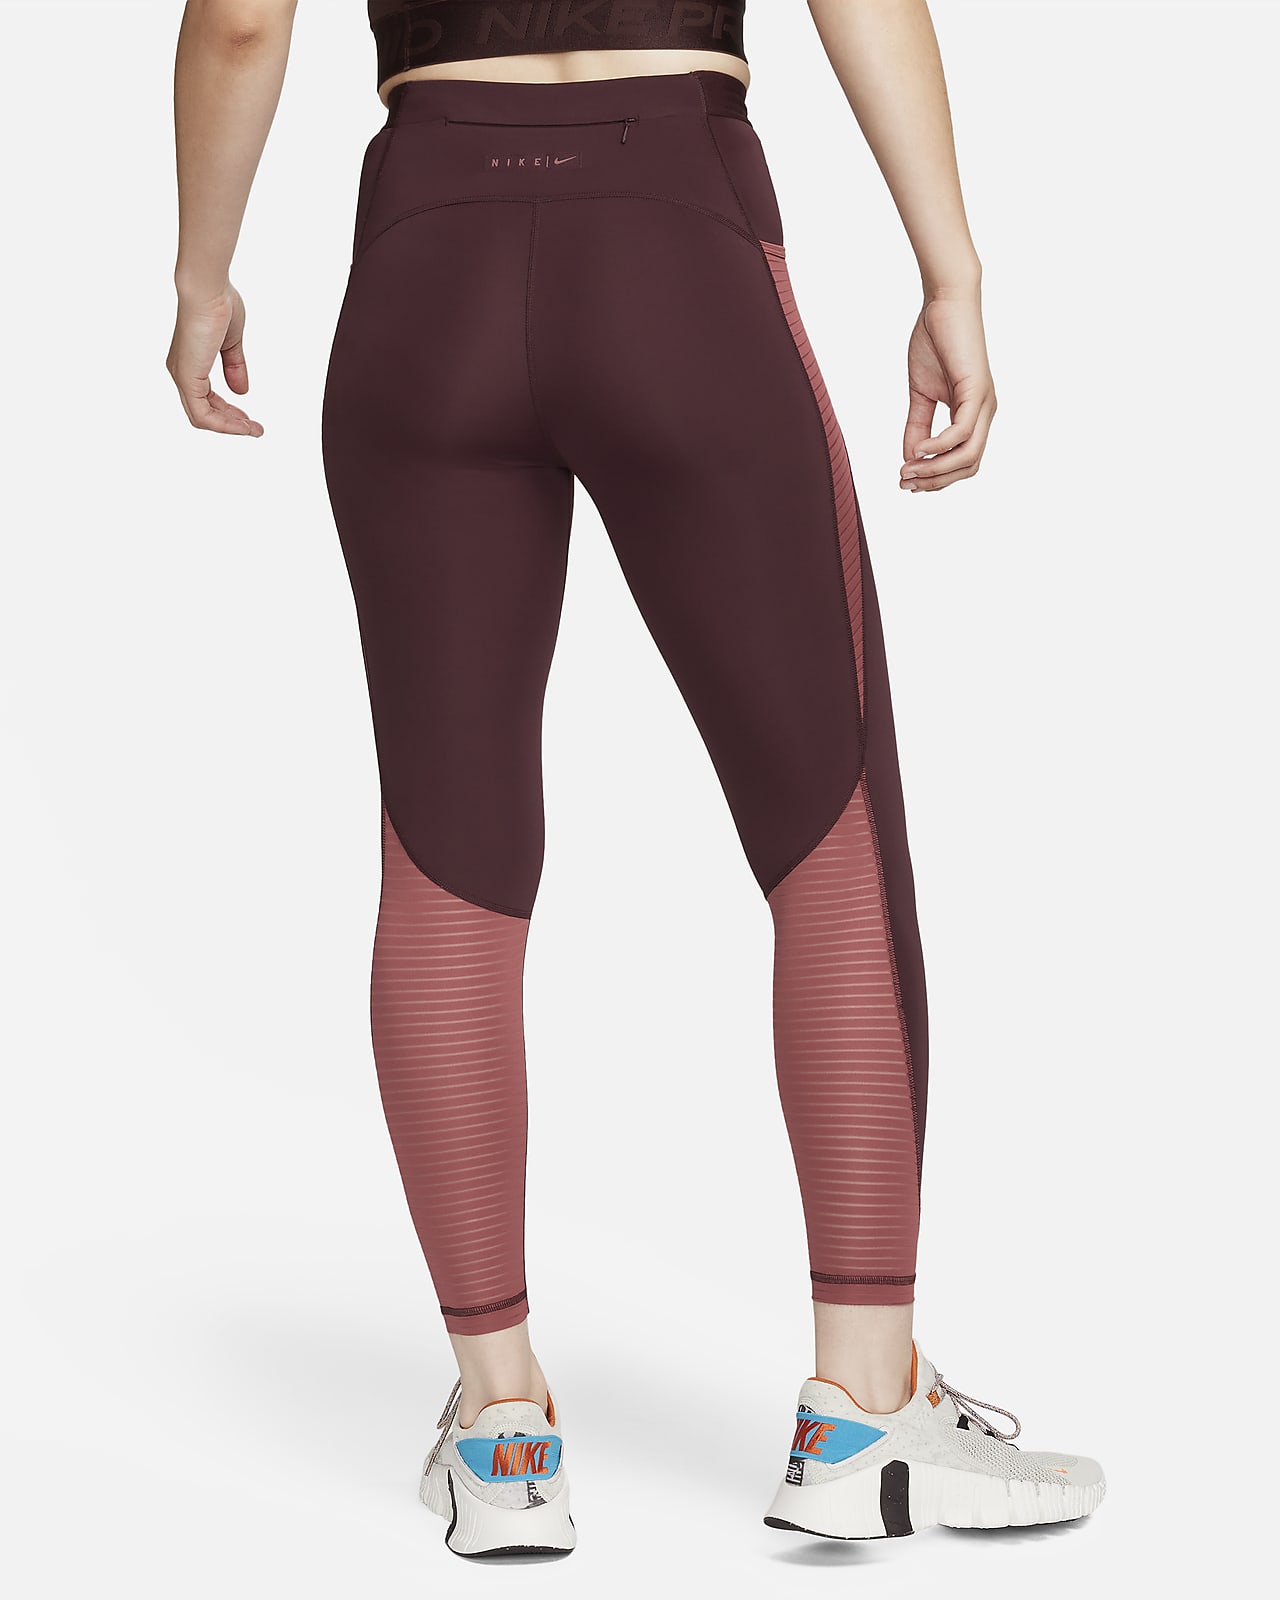 Shop Fast Women's Mid-Rise 7/8 Running Leggings with Pockets | Nike KSA